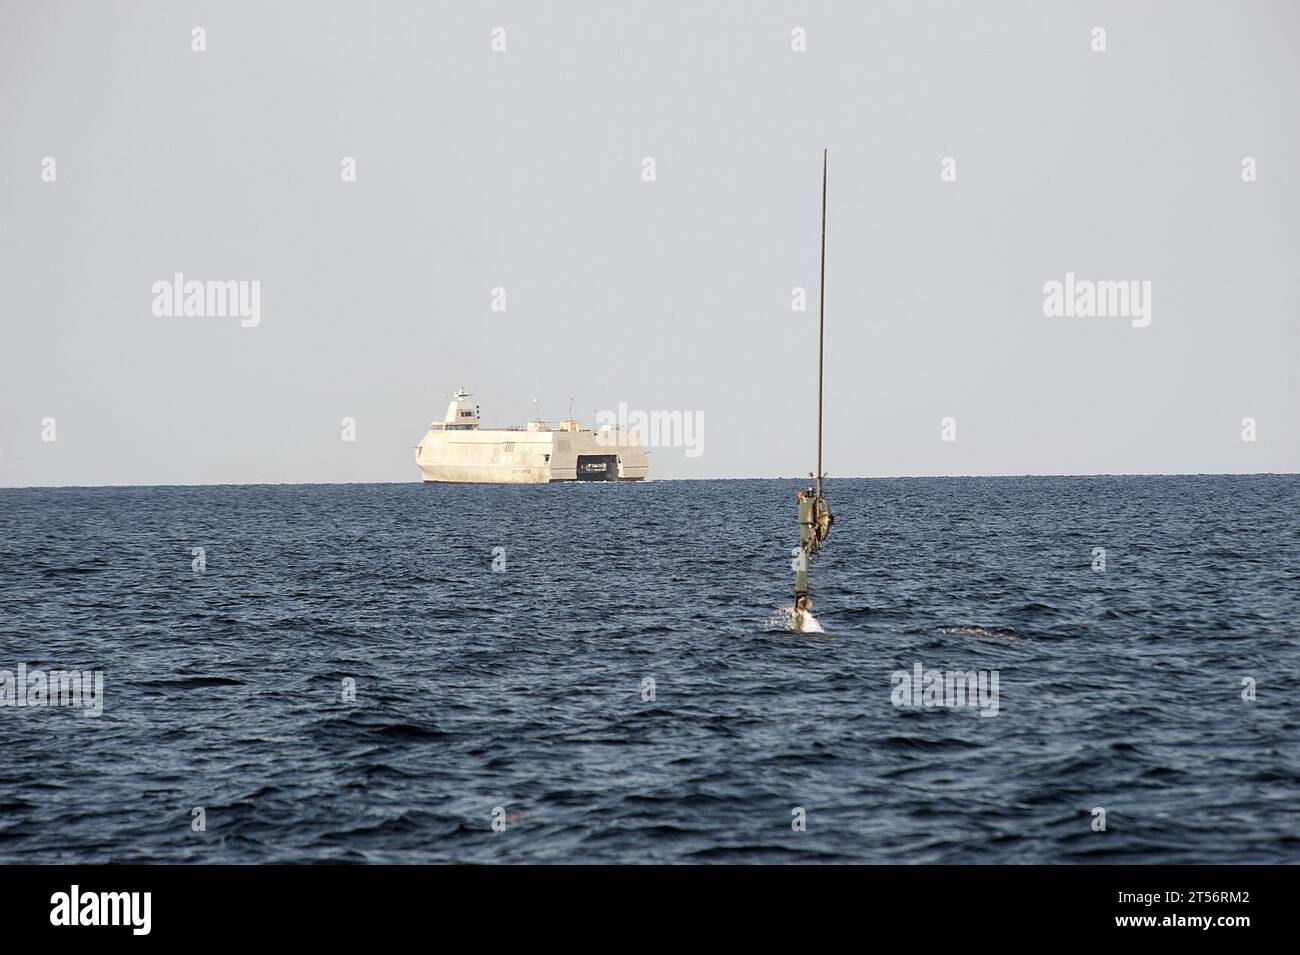 Oficina de investigación naval fotografías e imágenes de alta resolución -  Alamy